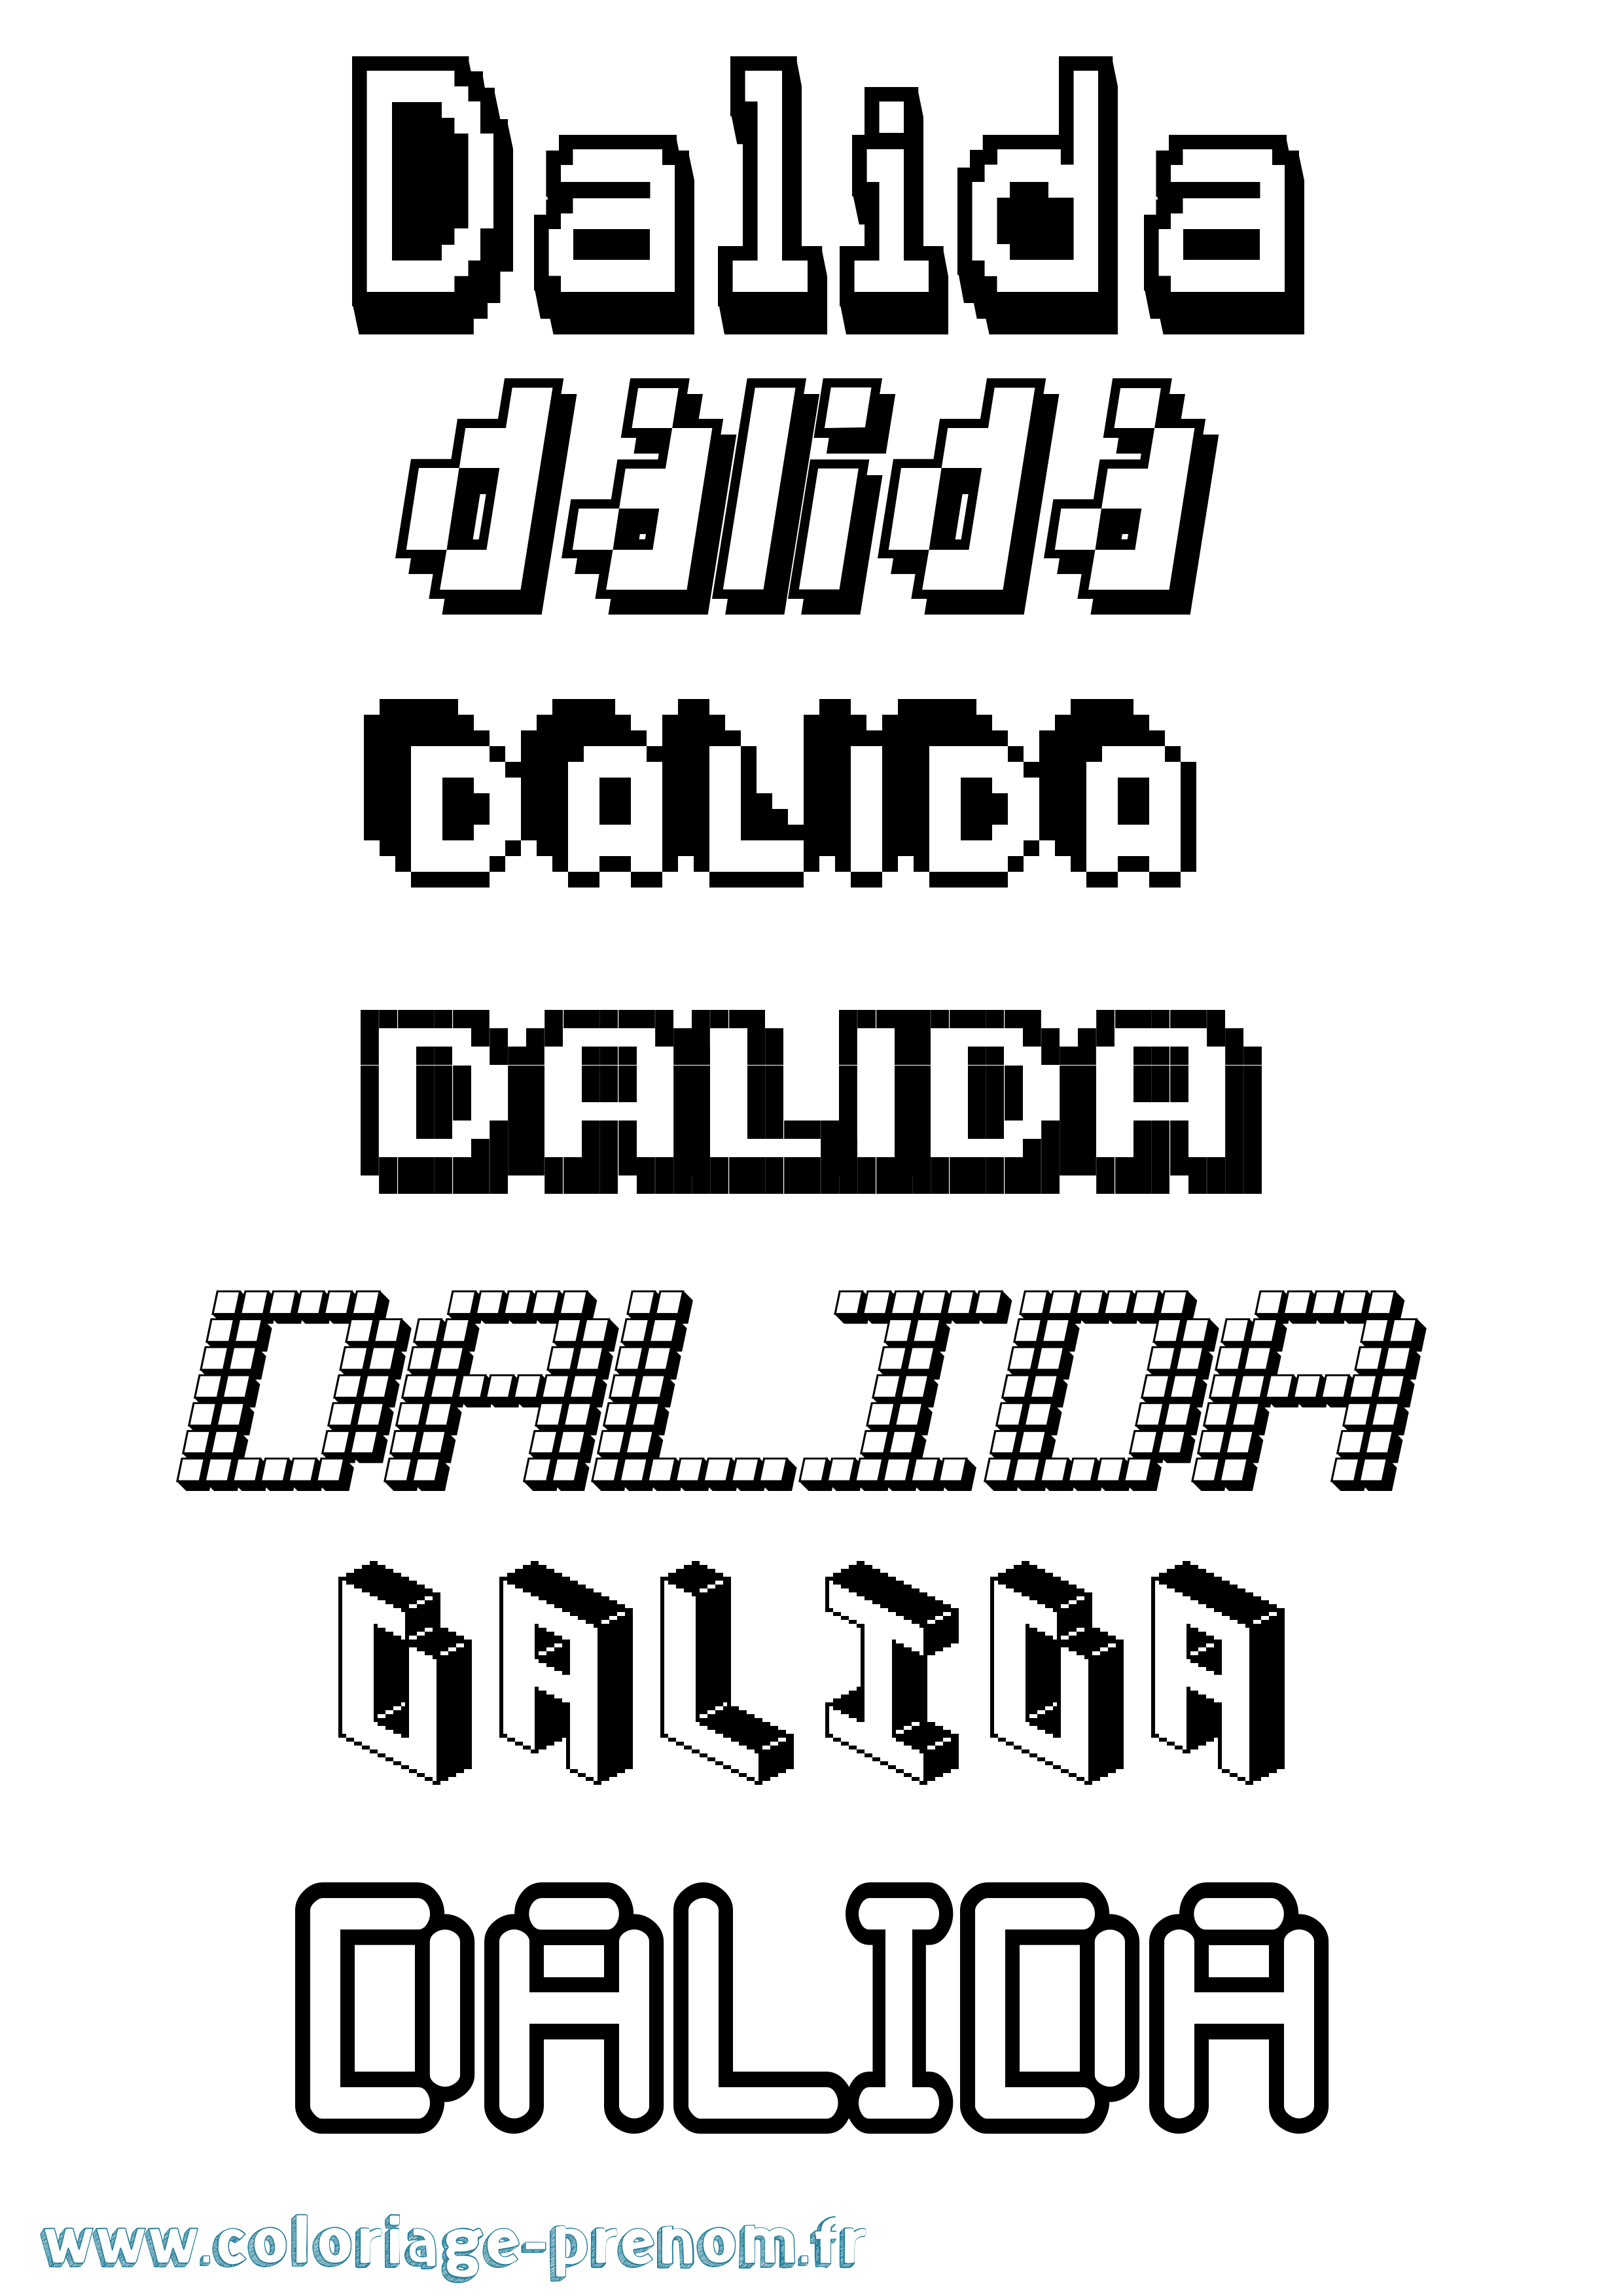 Coloriage prénom Dalida Pixel